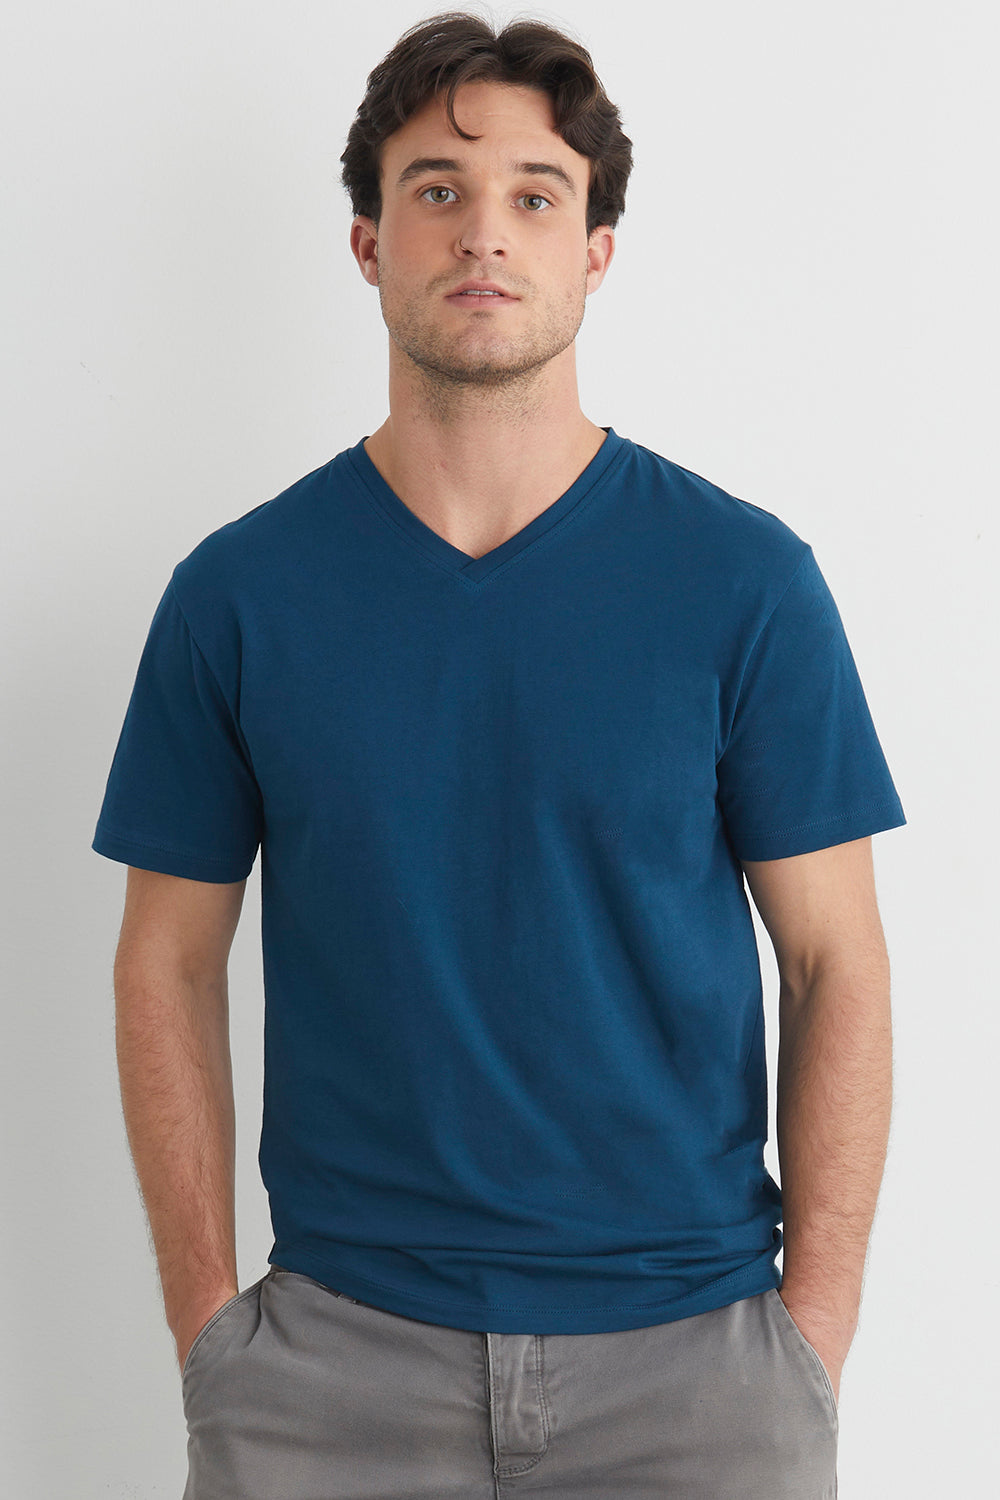 Fair Indigo Women's Organic Long Sleeve V-Neck T-Shirt, Horizon Blue, S